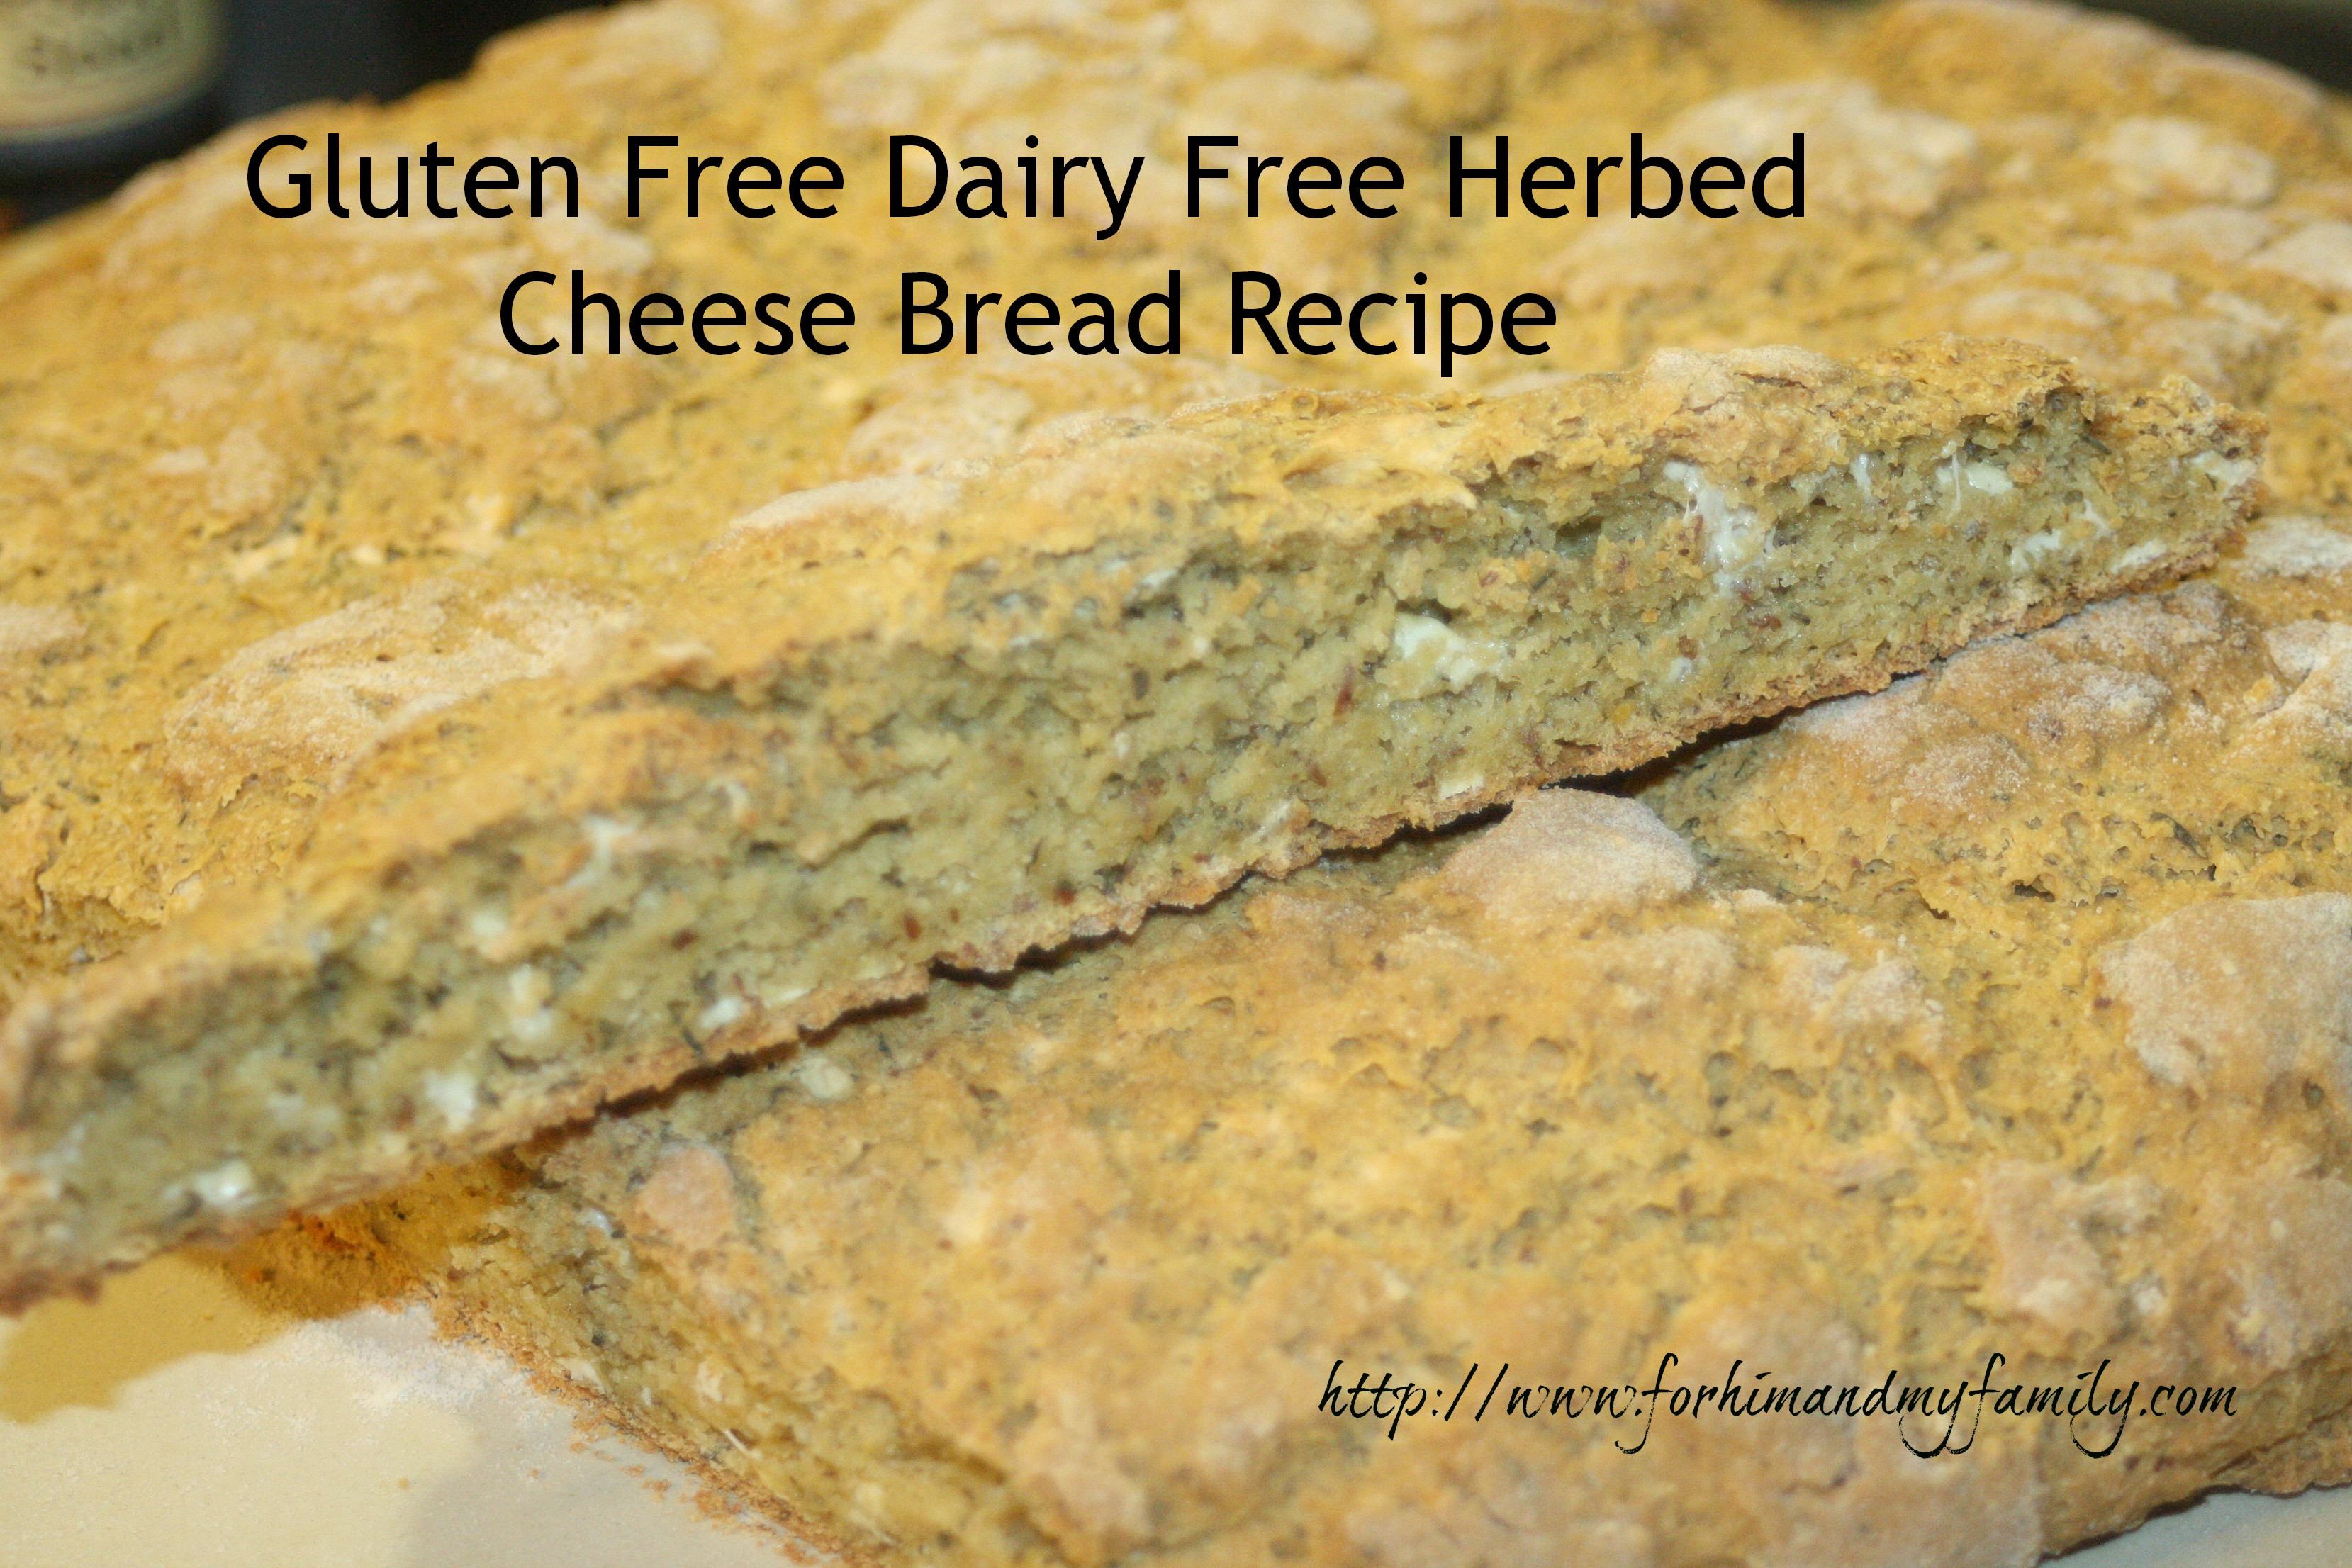 Gluten Free Dairy Free Bread Recipe
 Gluten Free Dairy Free Herbed Cheese Bread Recipe For